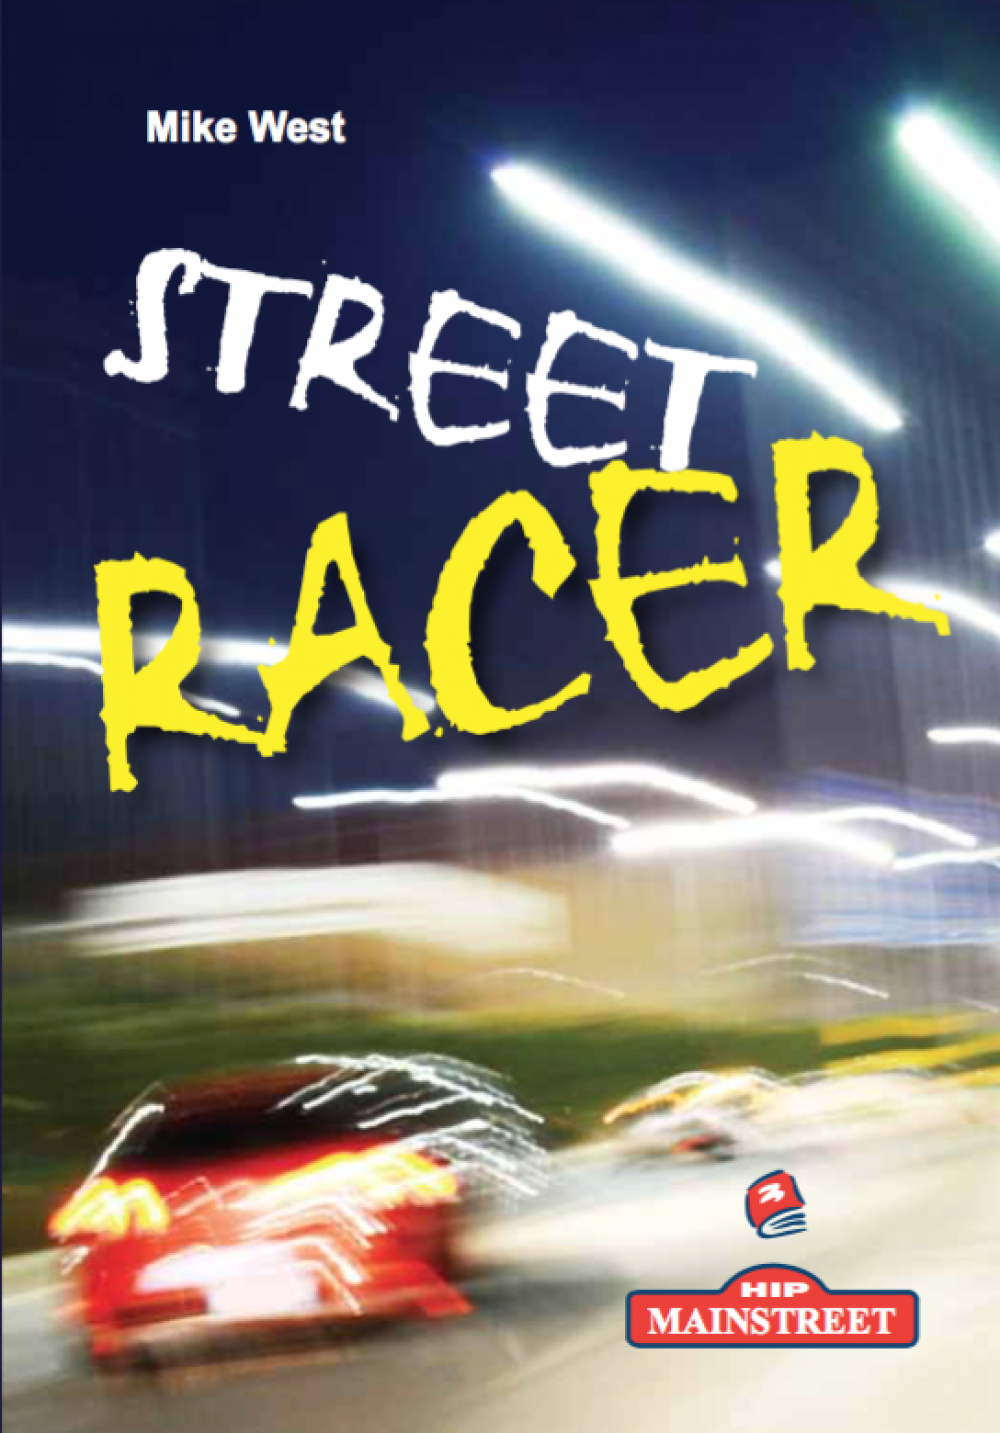 Sreet Racer front cover